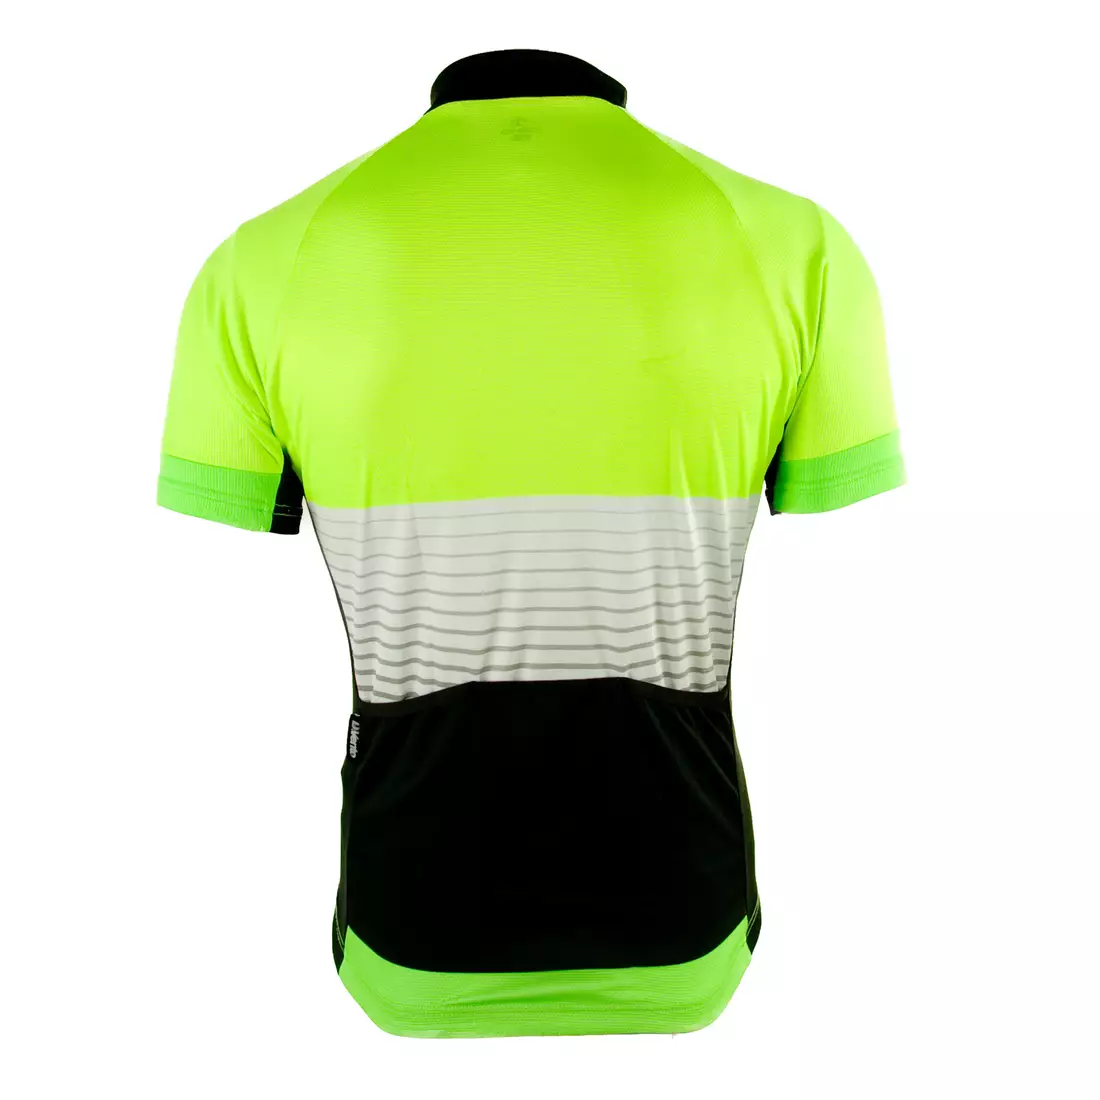 DEKO DK-1018-002 Fluoro-zeleno-černý cyklistický dres